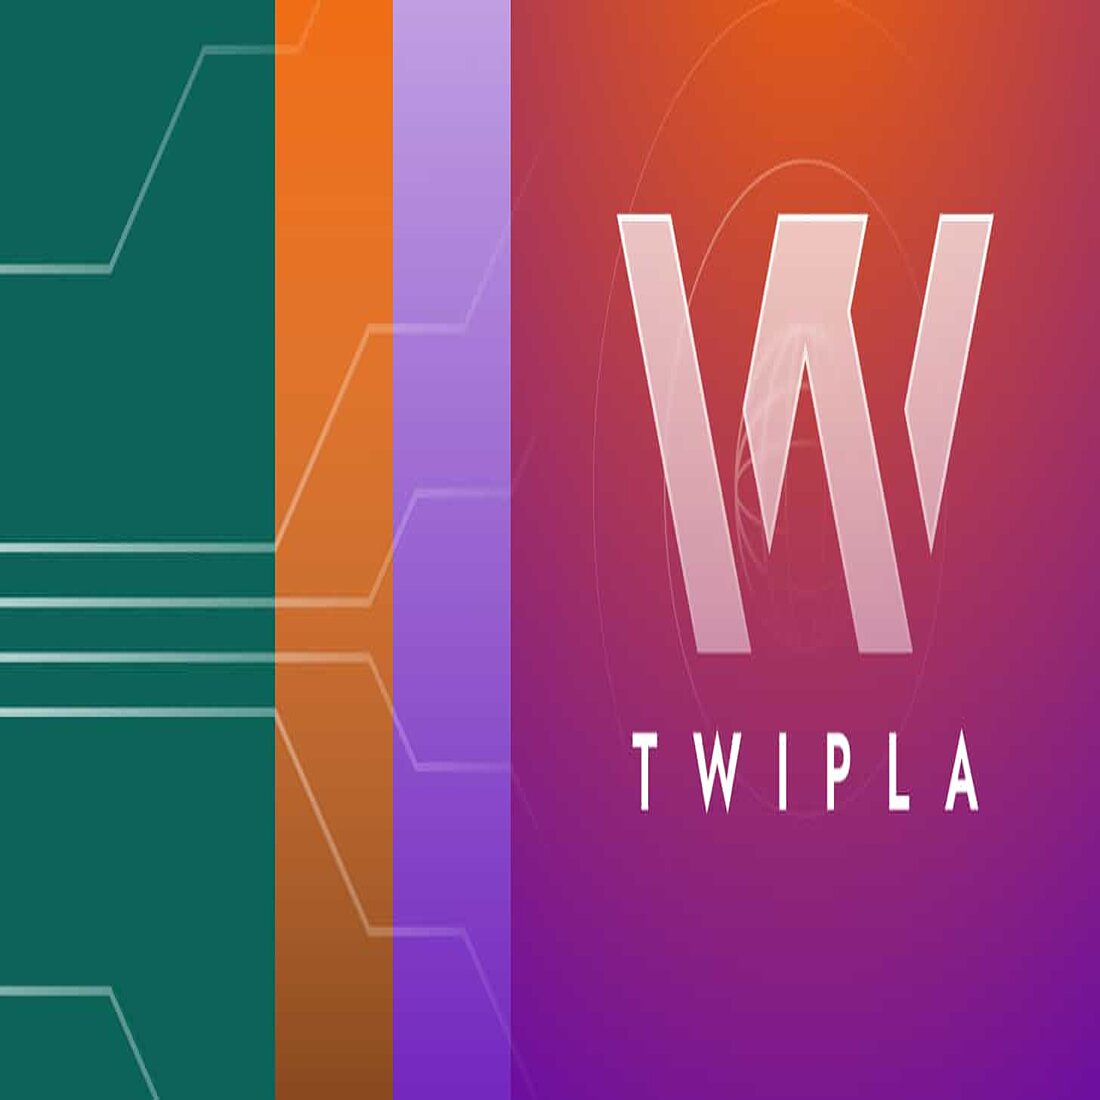 Website Intelligence News - TWIPLA - rebranding